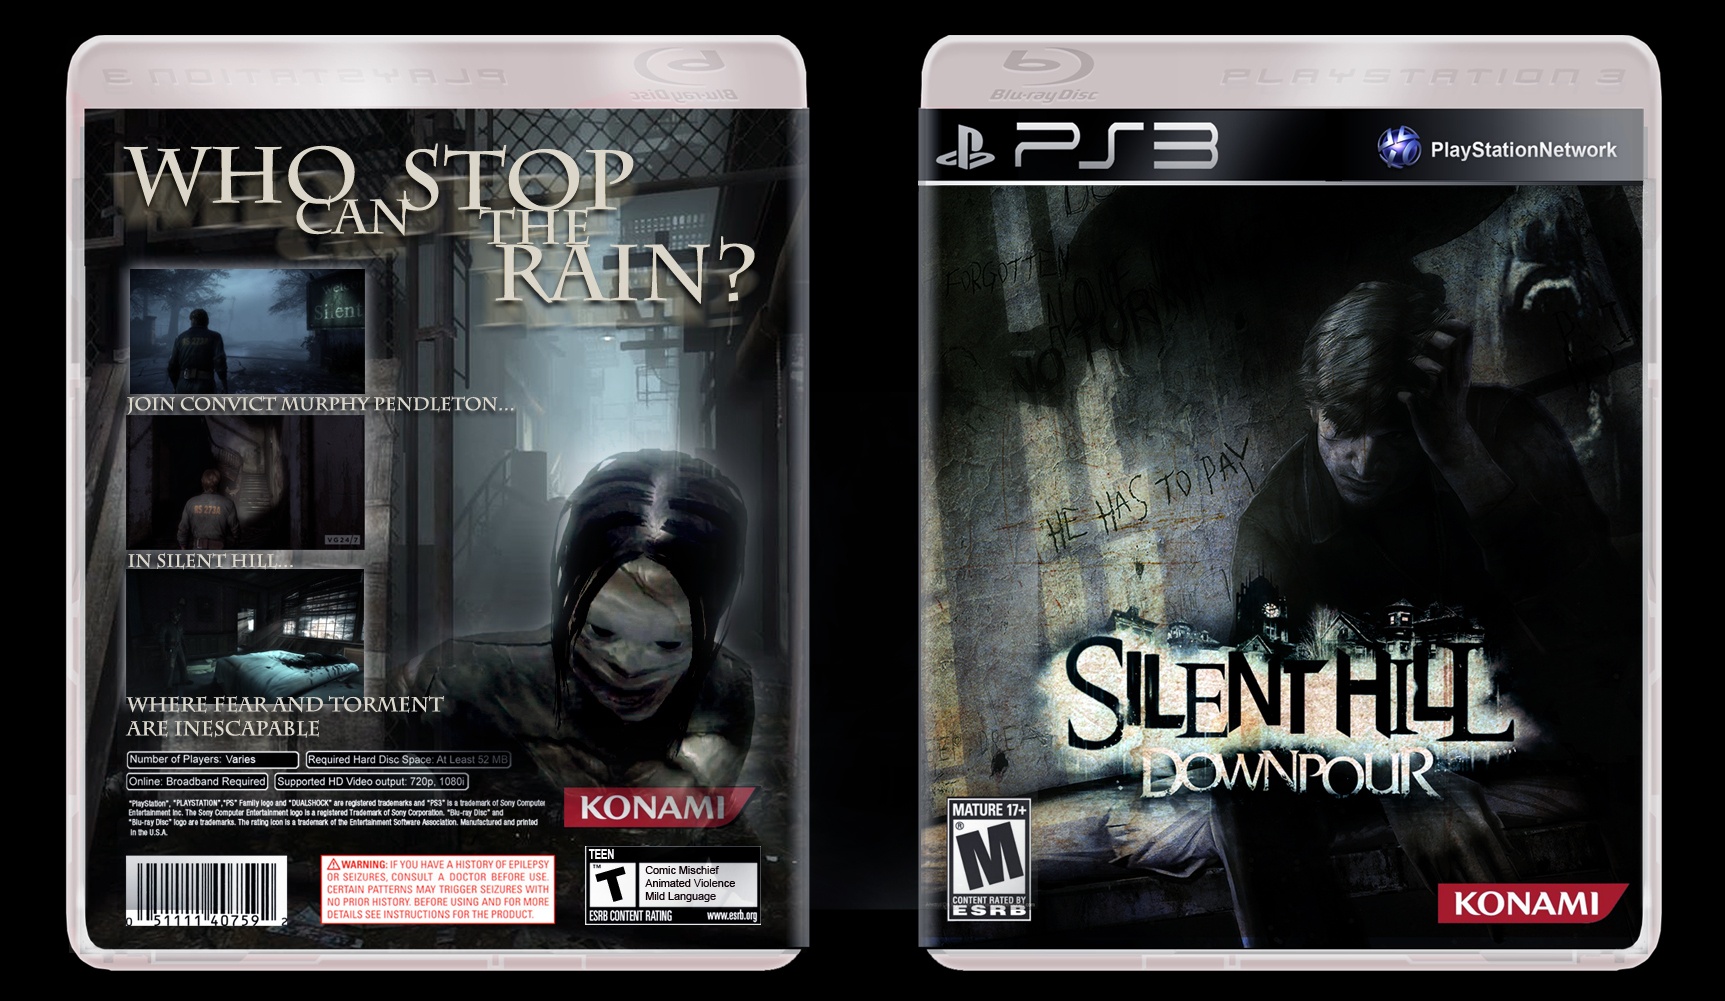 Silent Hill: Downpour box cover